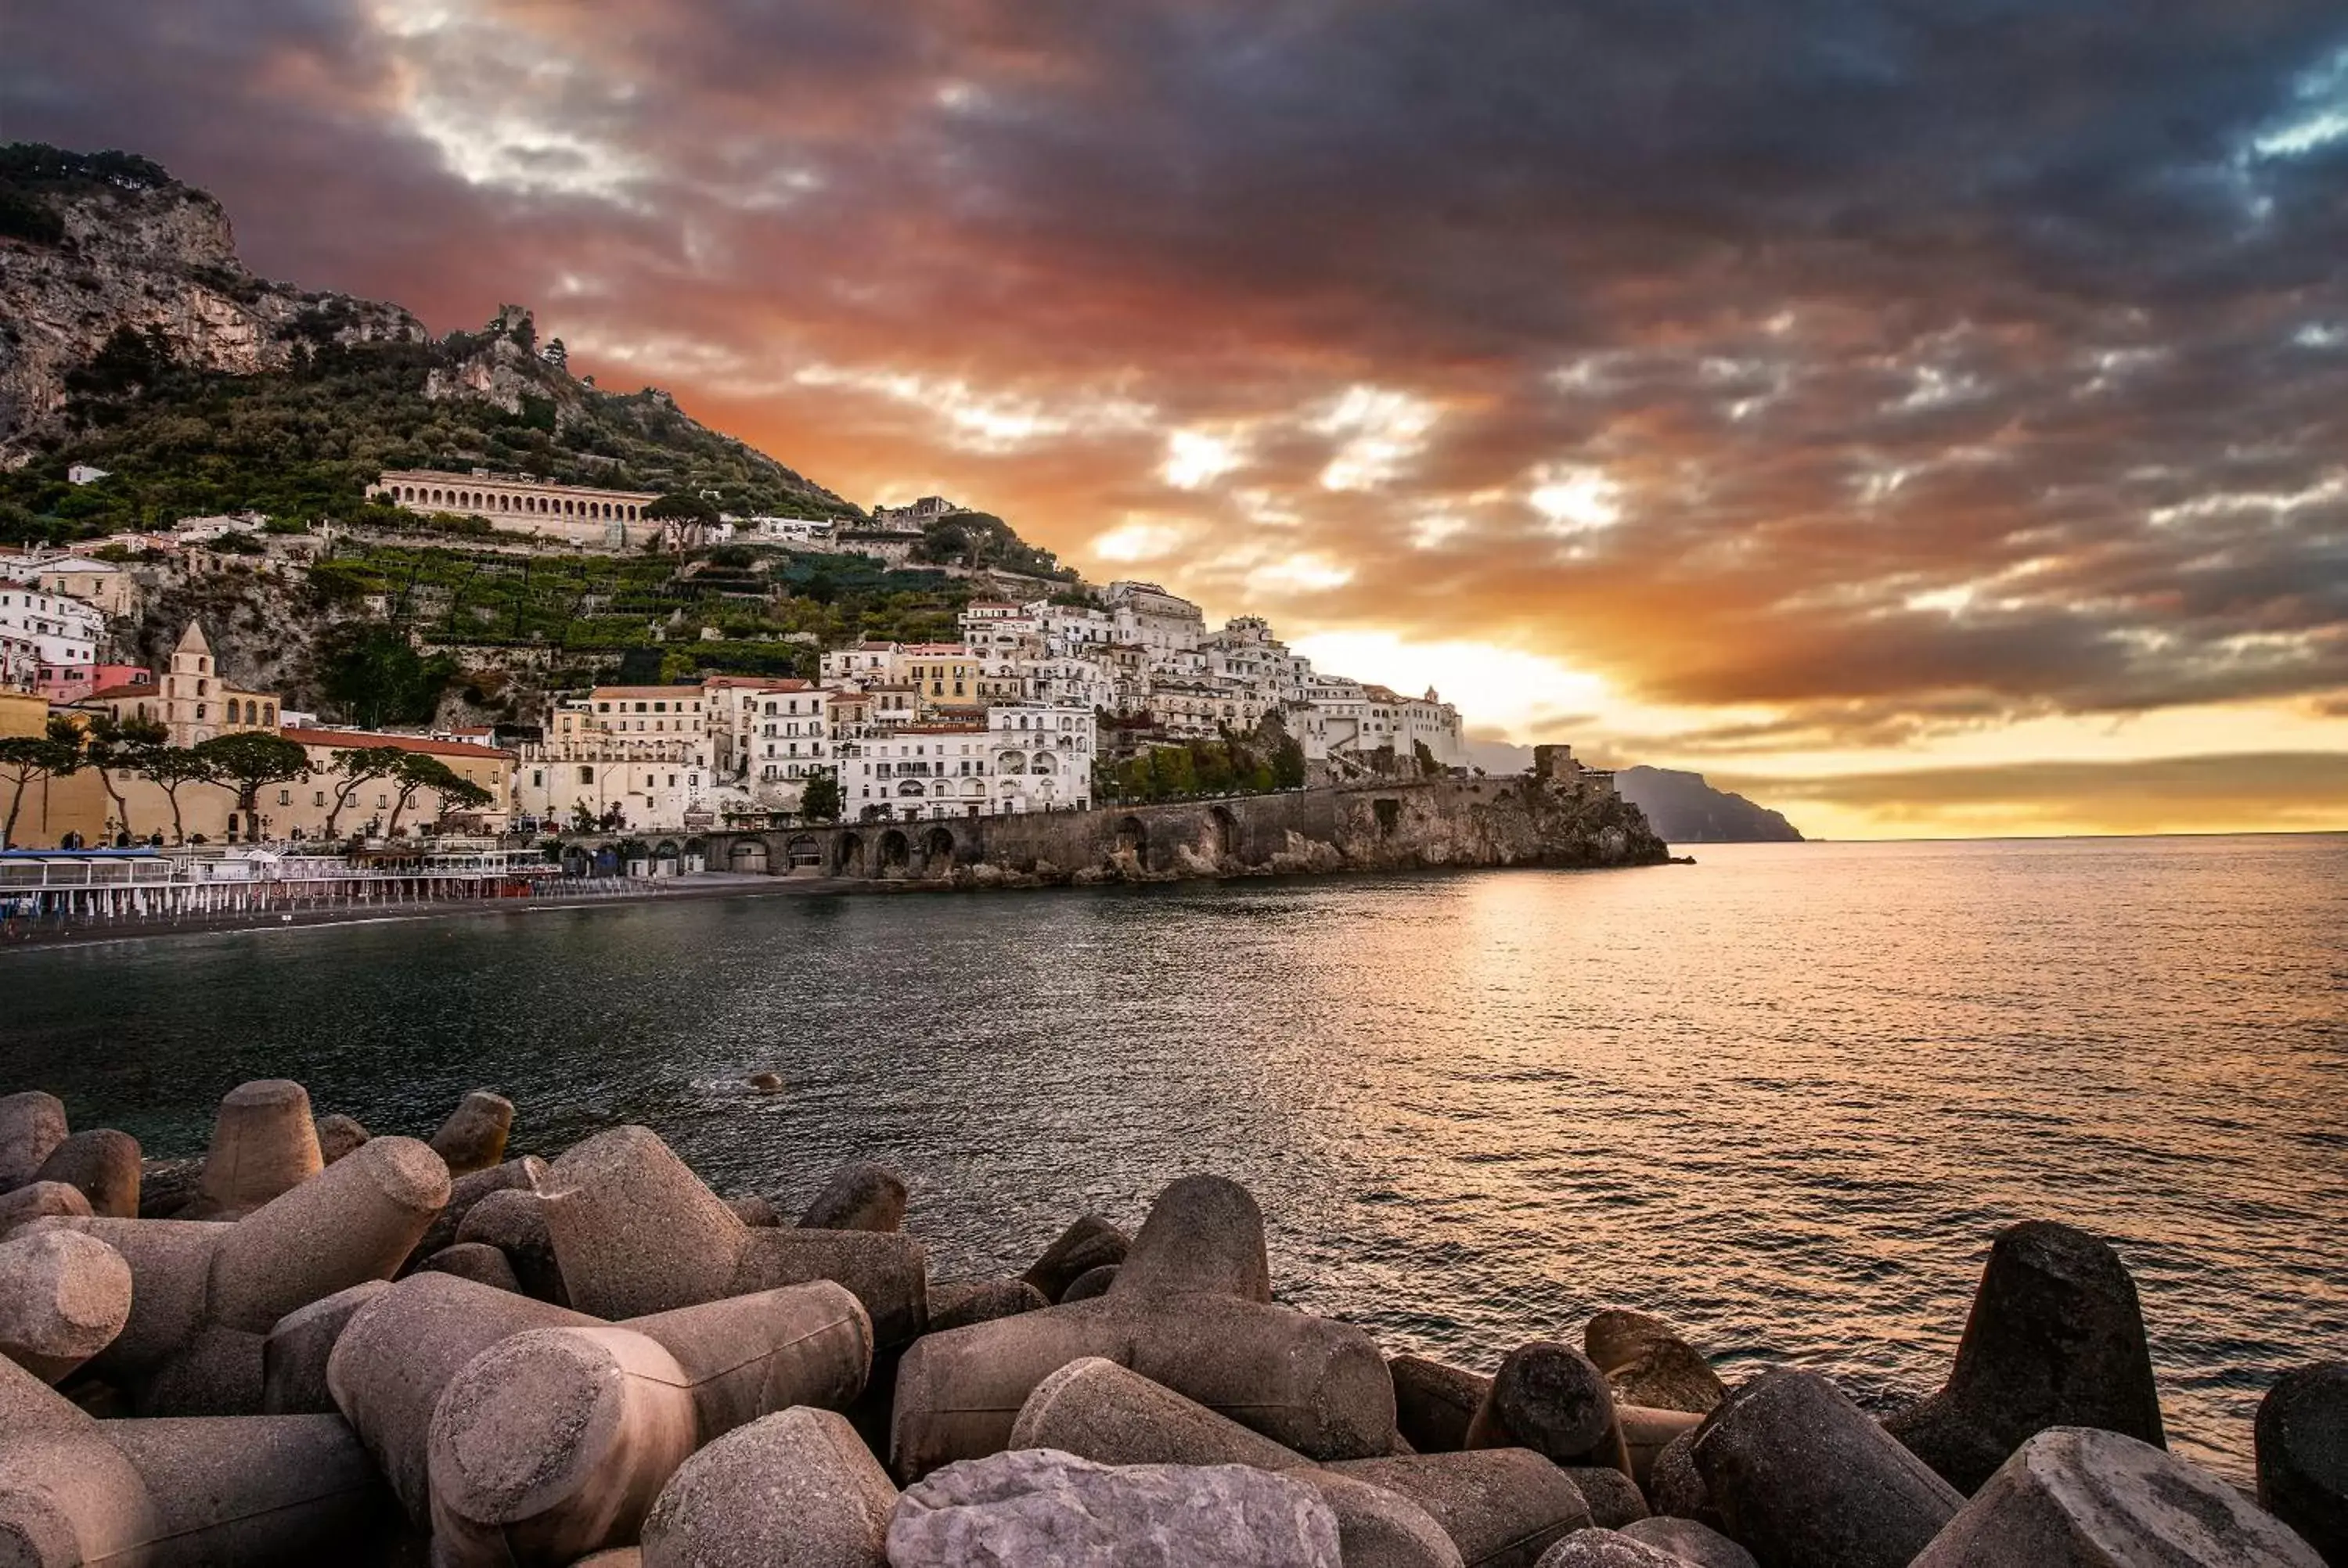 Vista d' Amalfi